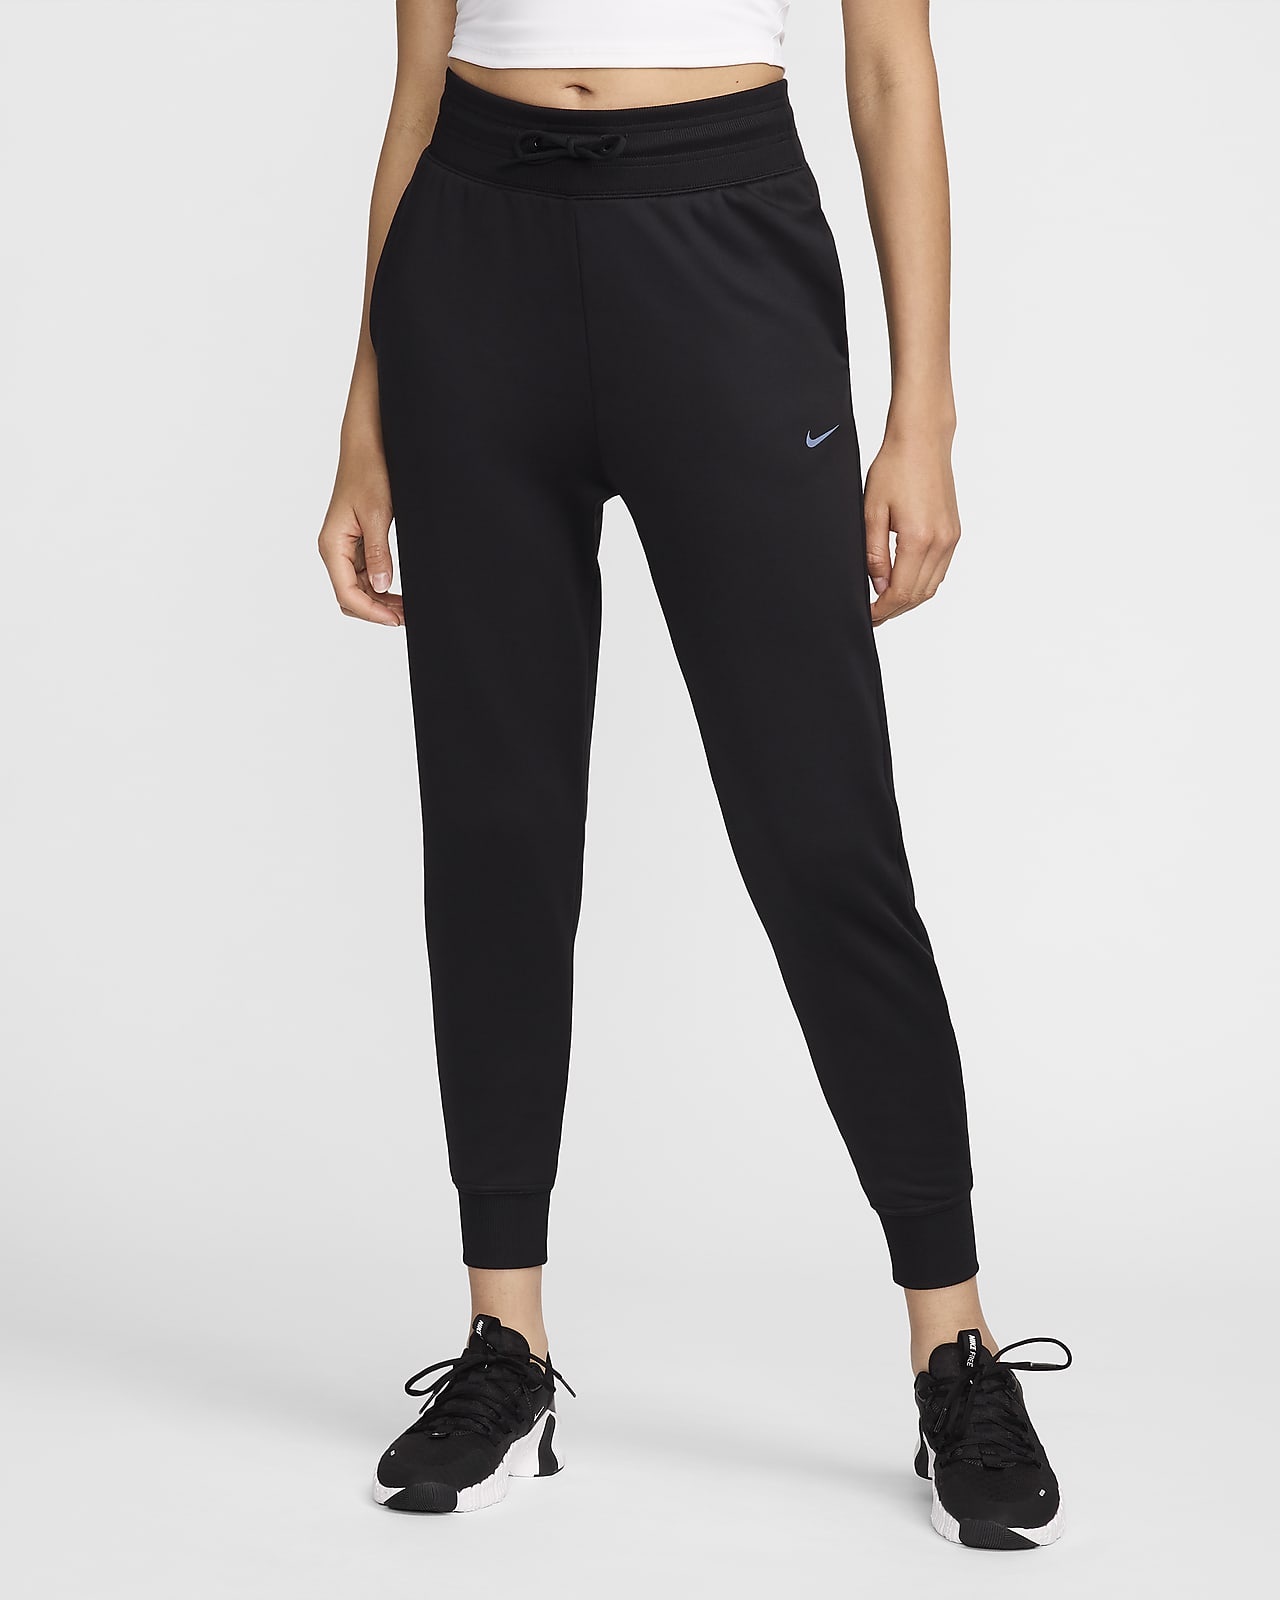 Nike Running pants THERMA-FIT ESSENTIAL in black